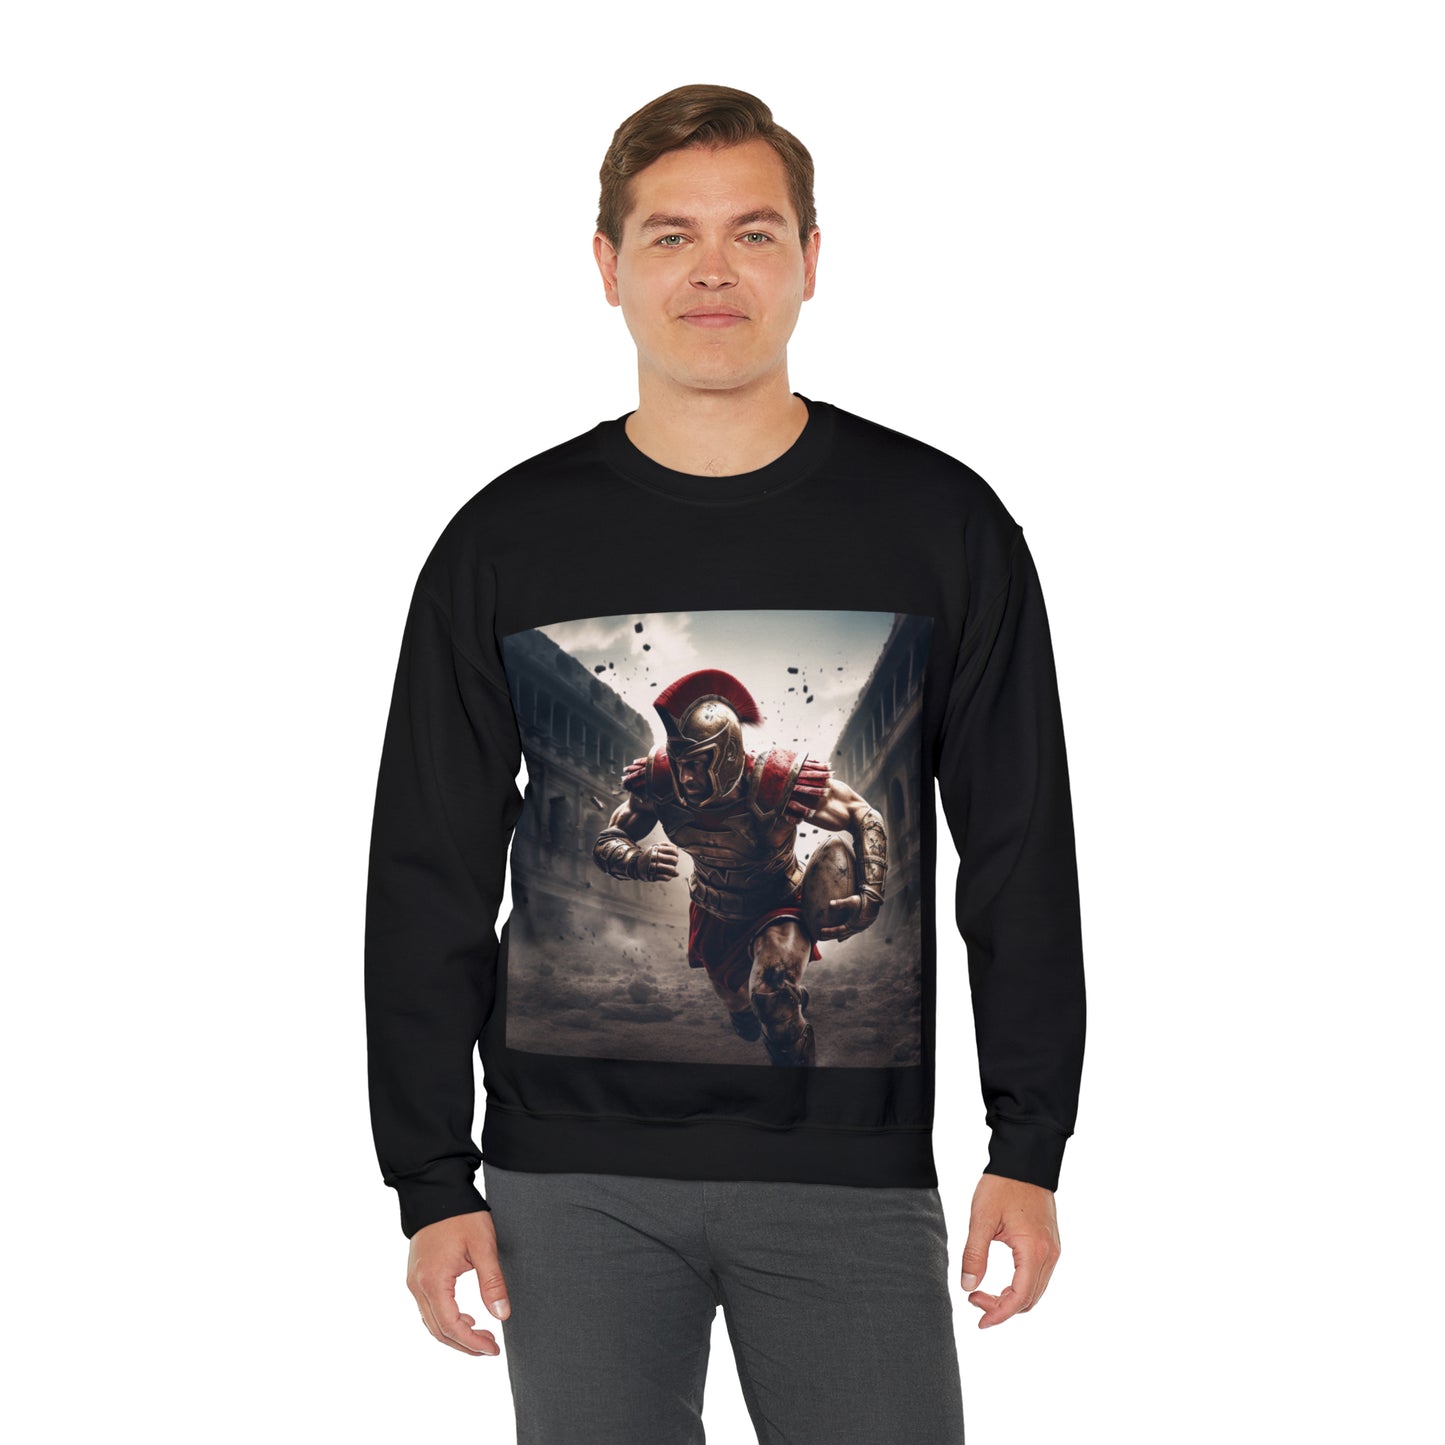 Spartan Rugby - black sweatshirt